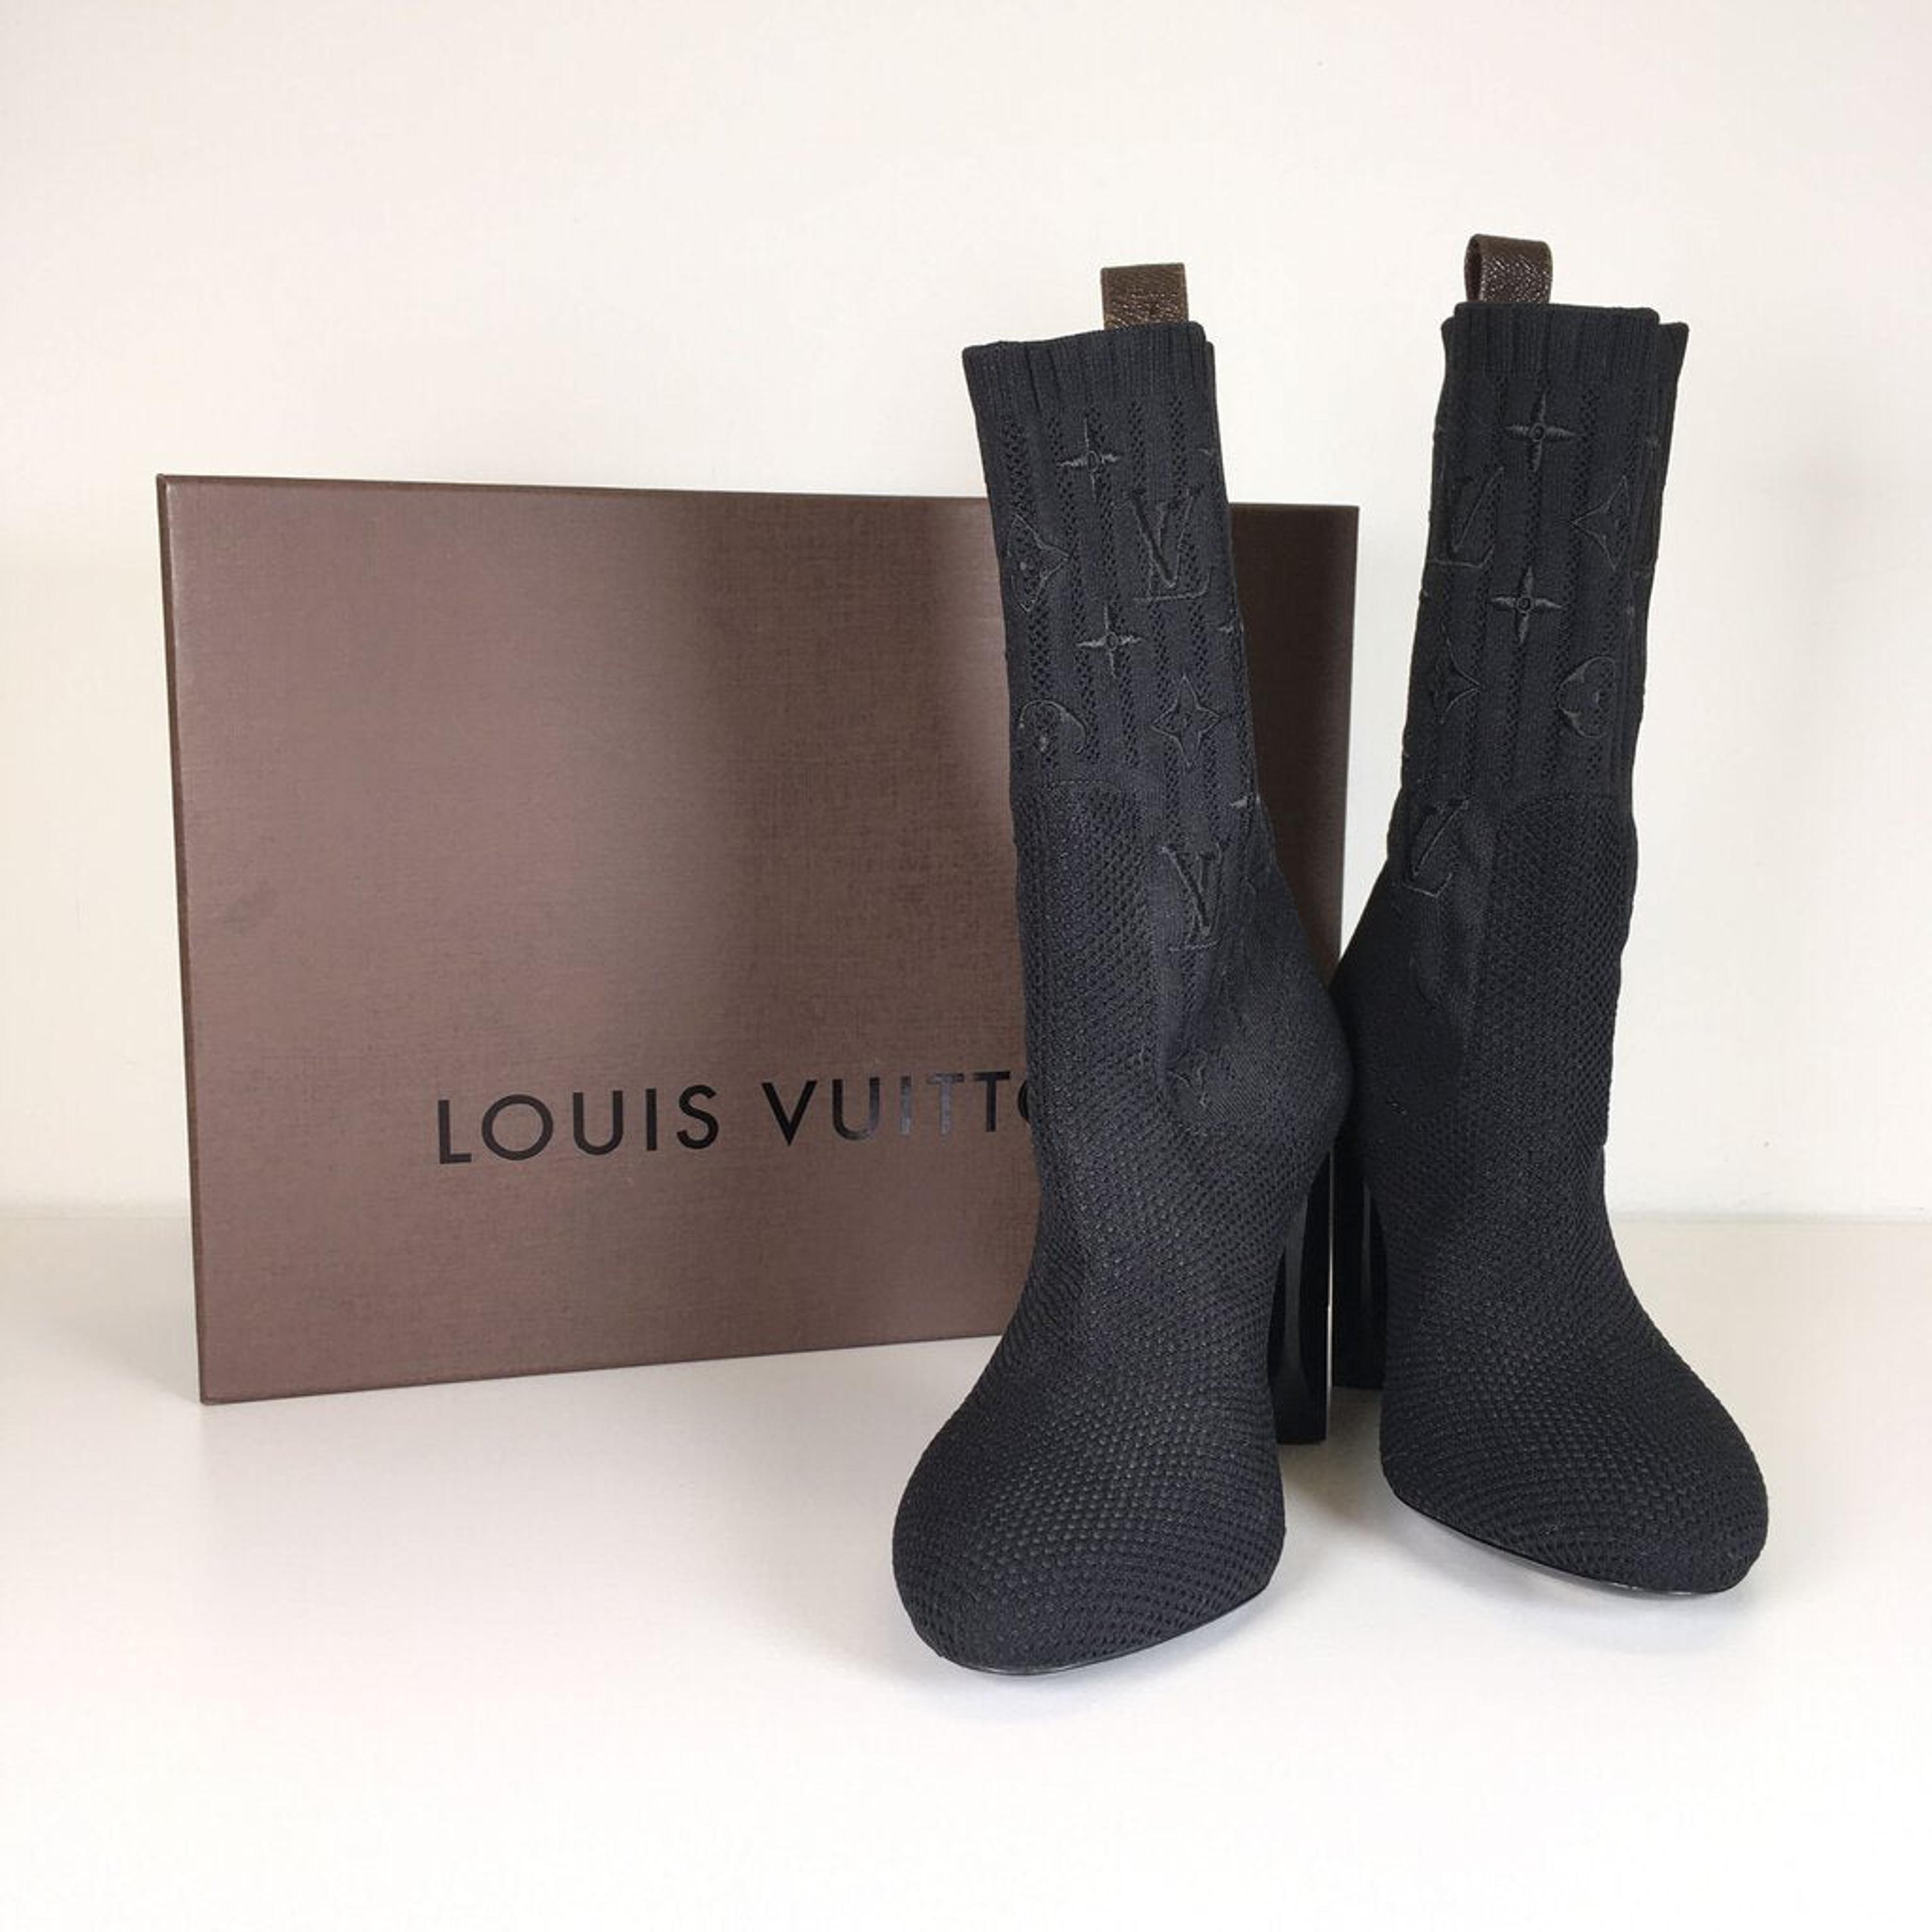 NTWRK - Louis Vuitton Silhouette Ankle Boots